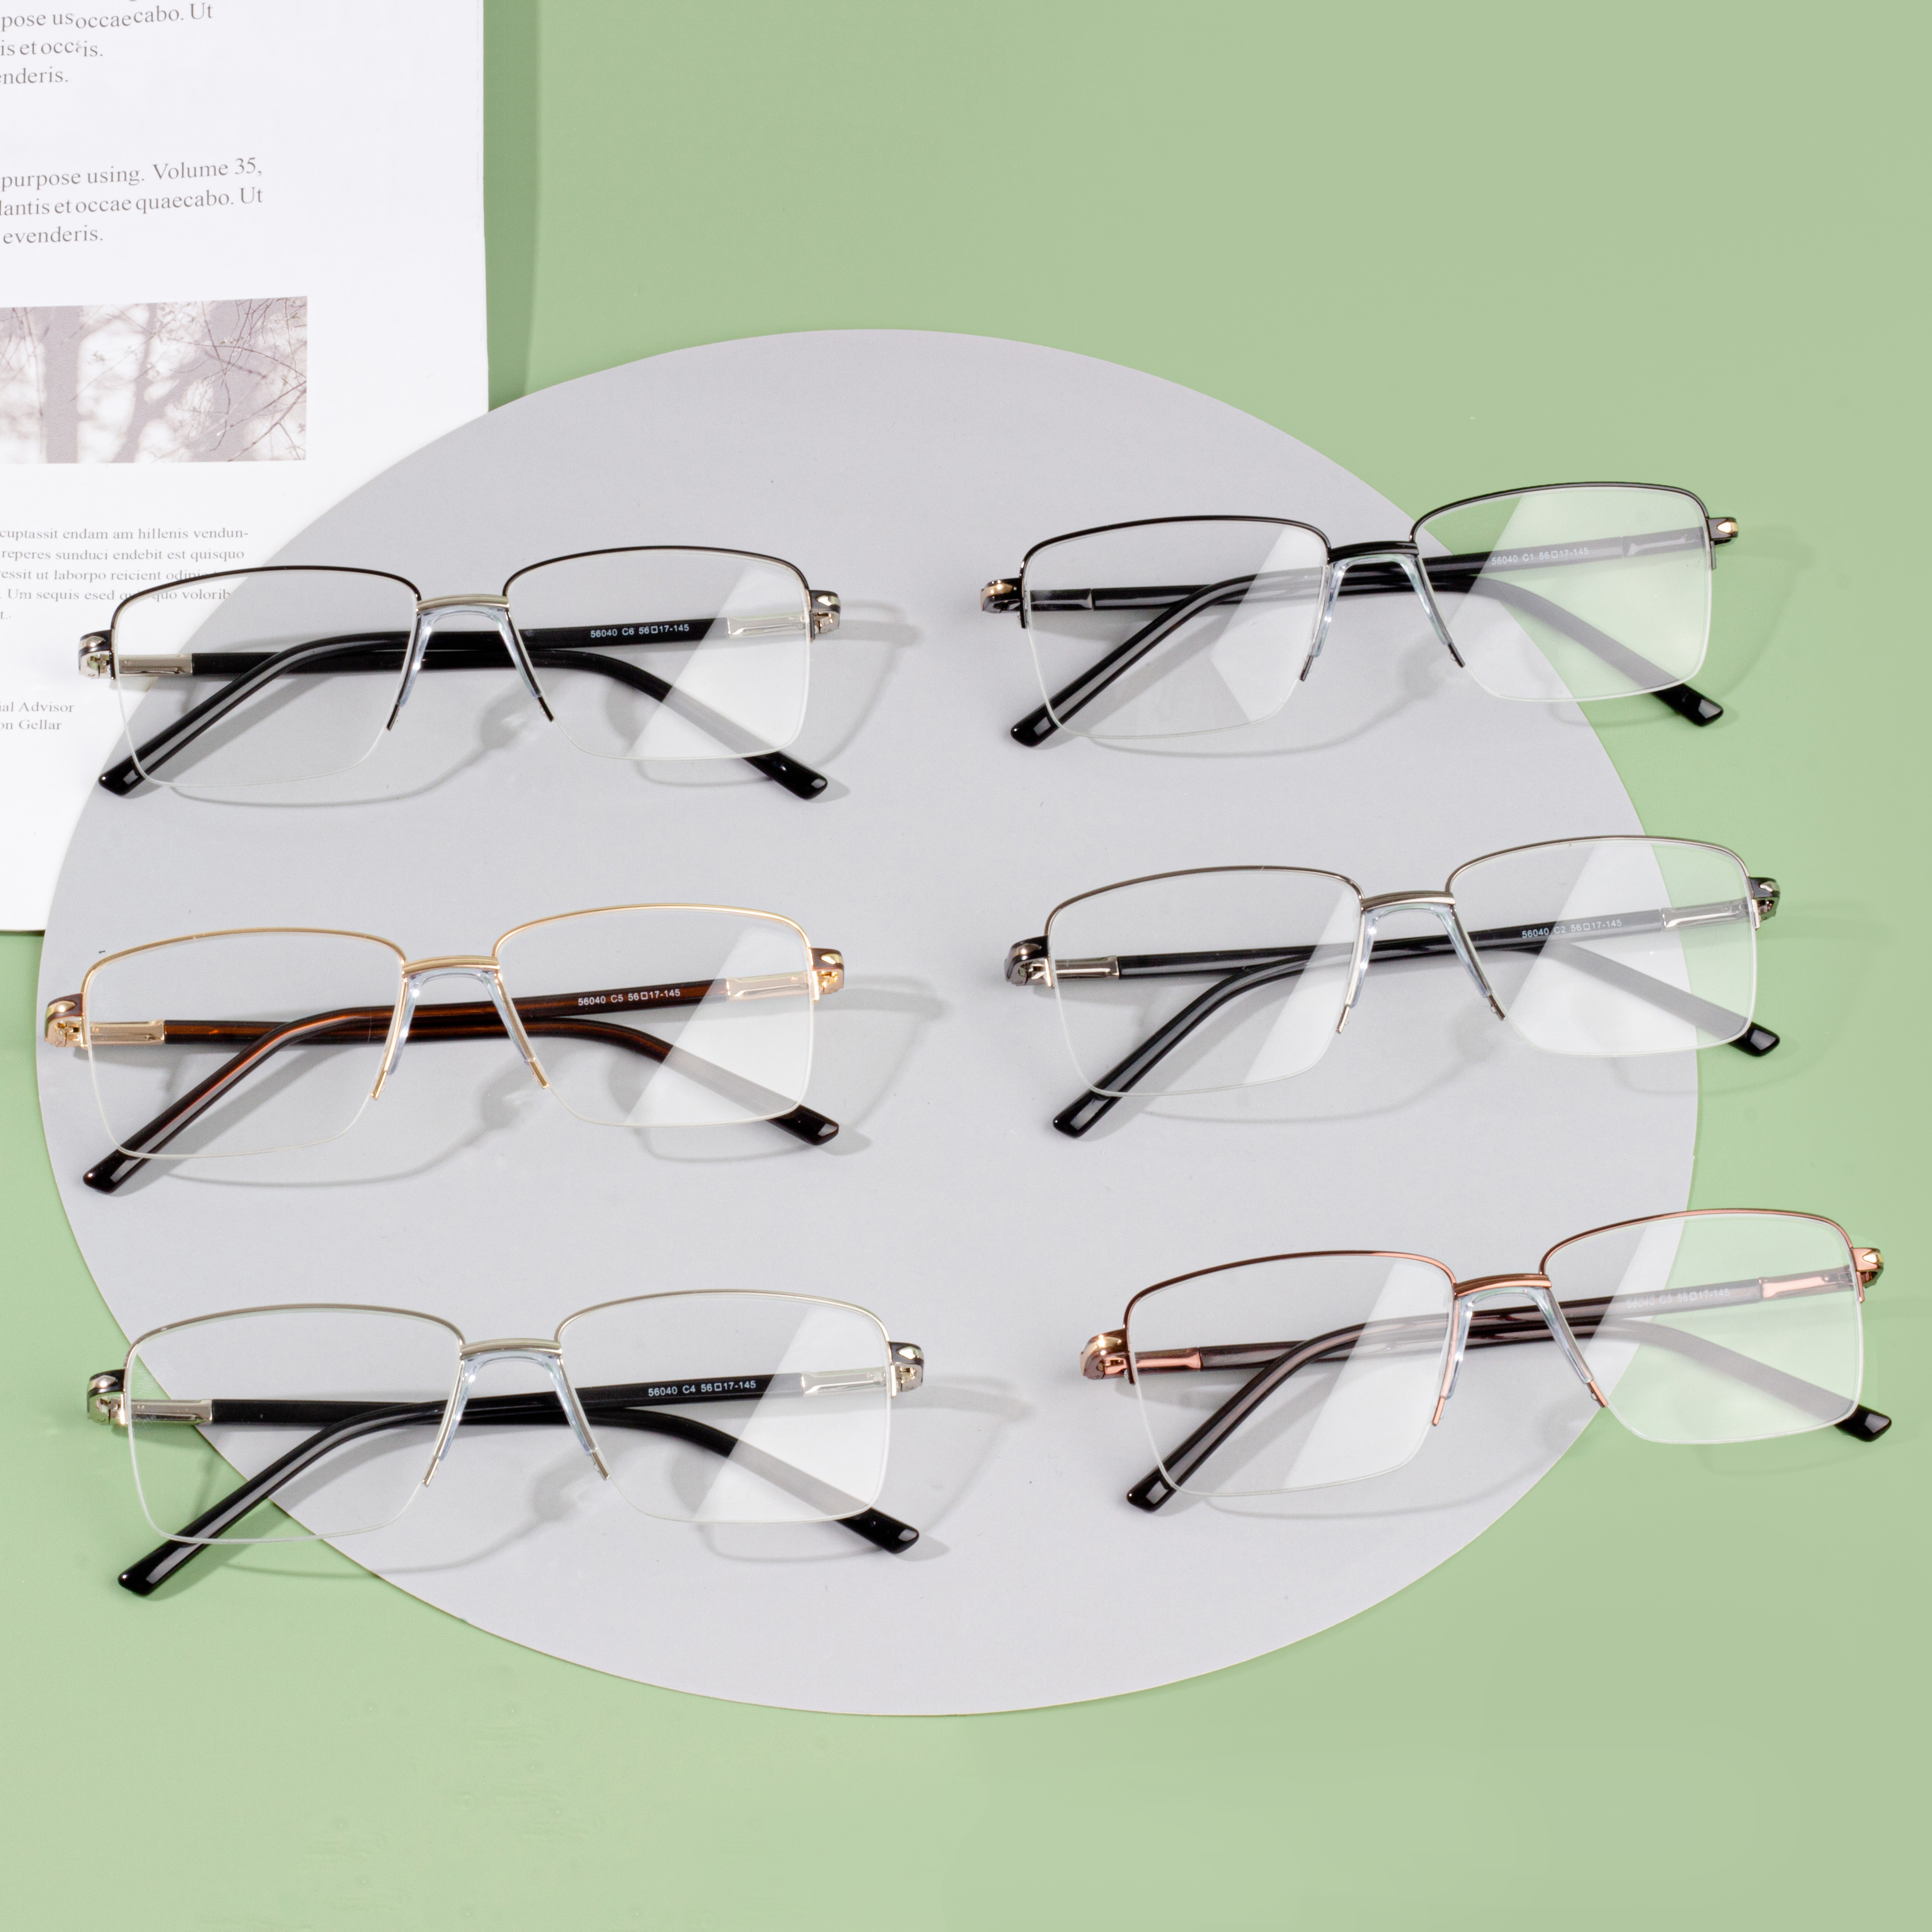 Cheap variisque Eyeglasses metallis tabulas generis parata hominum